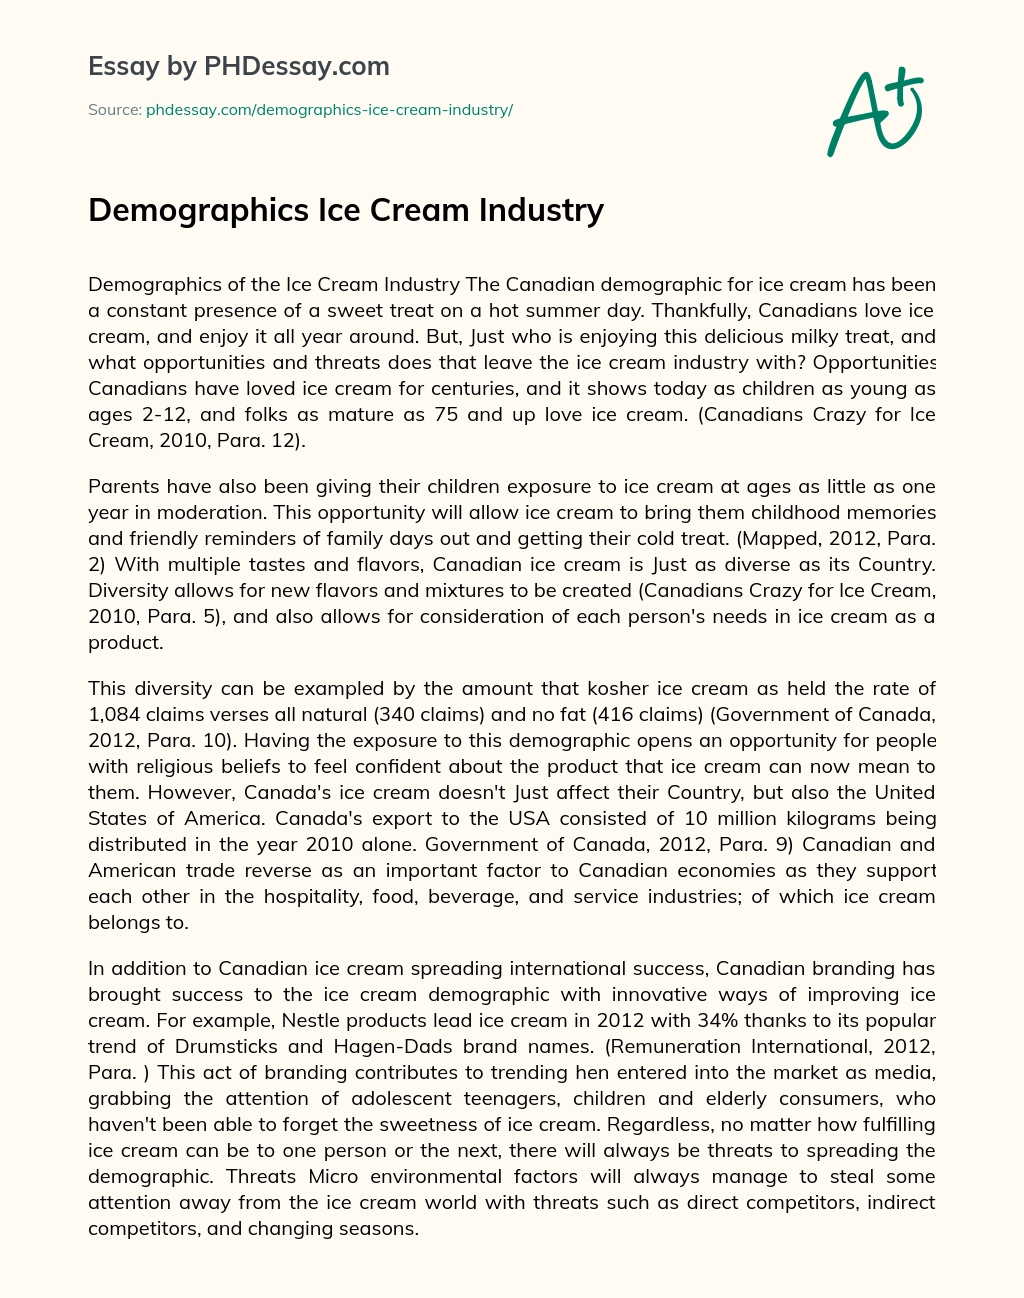 Demographics Ice Cream Industry essay